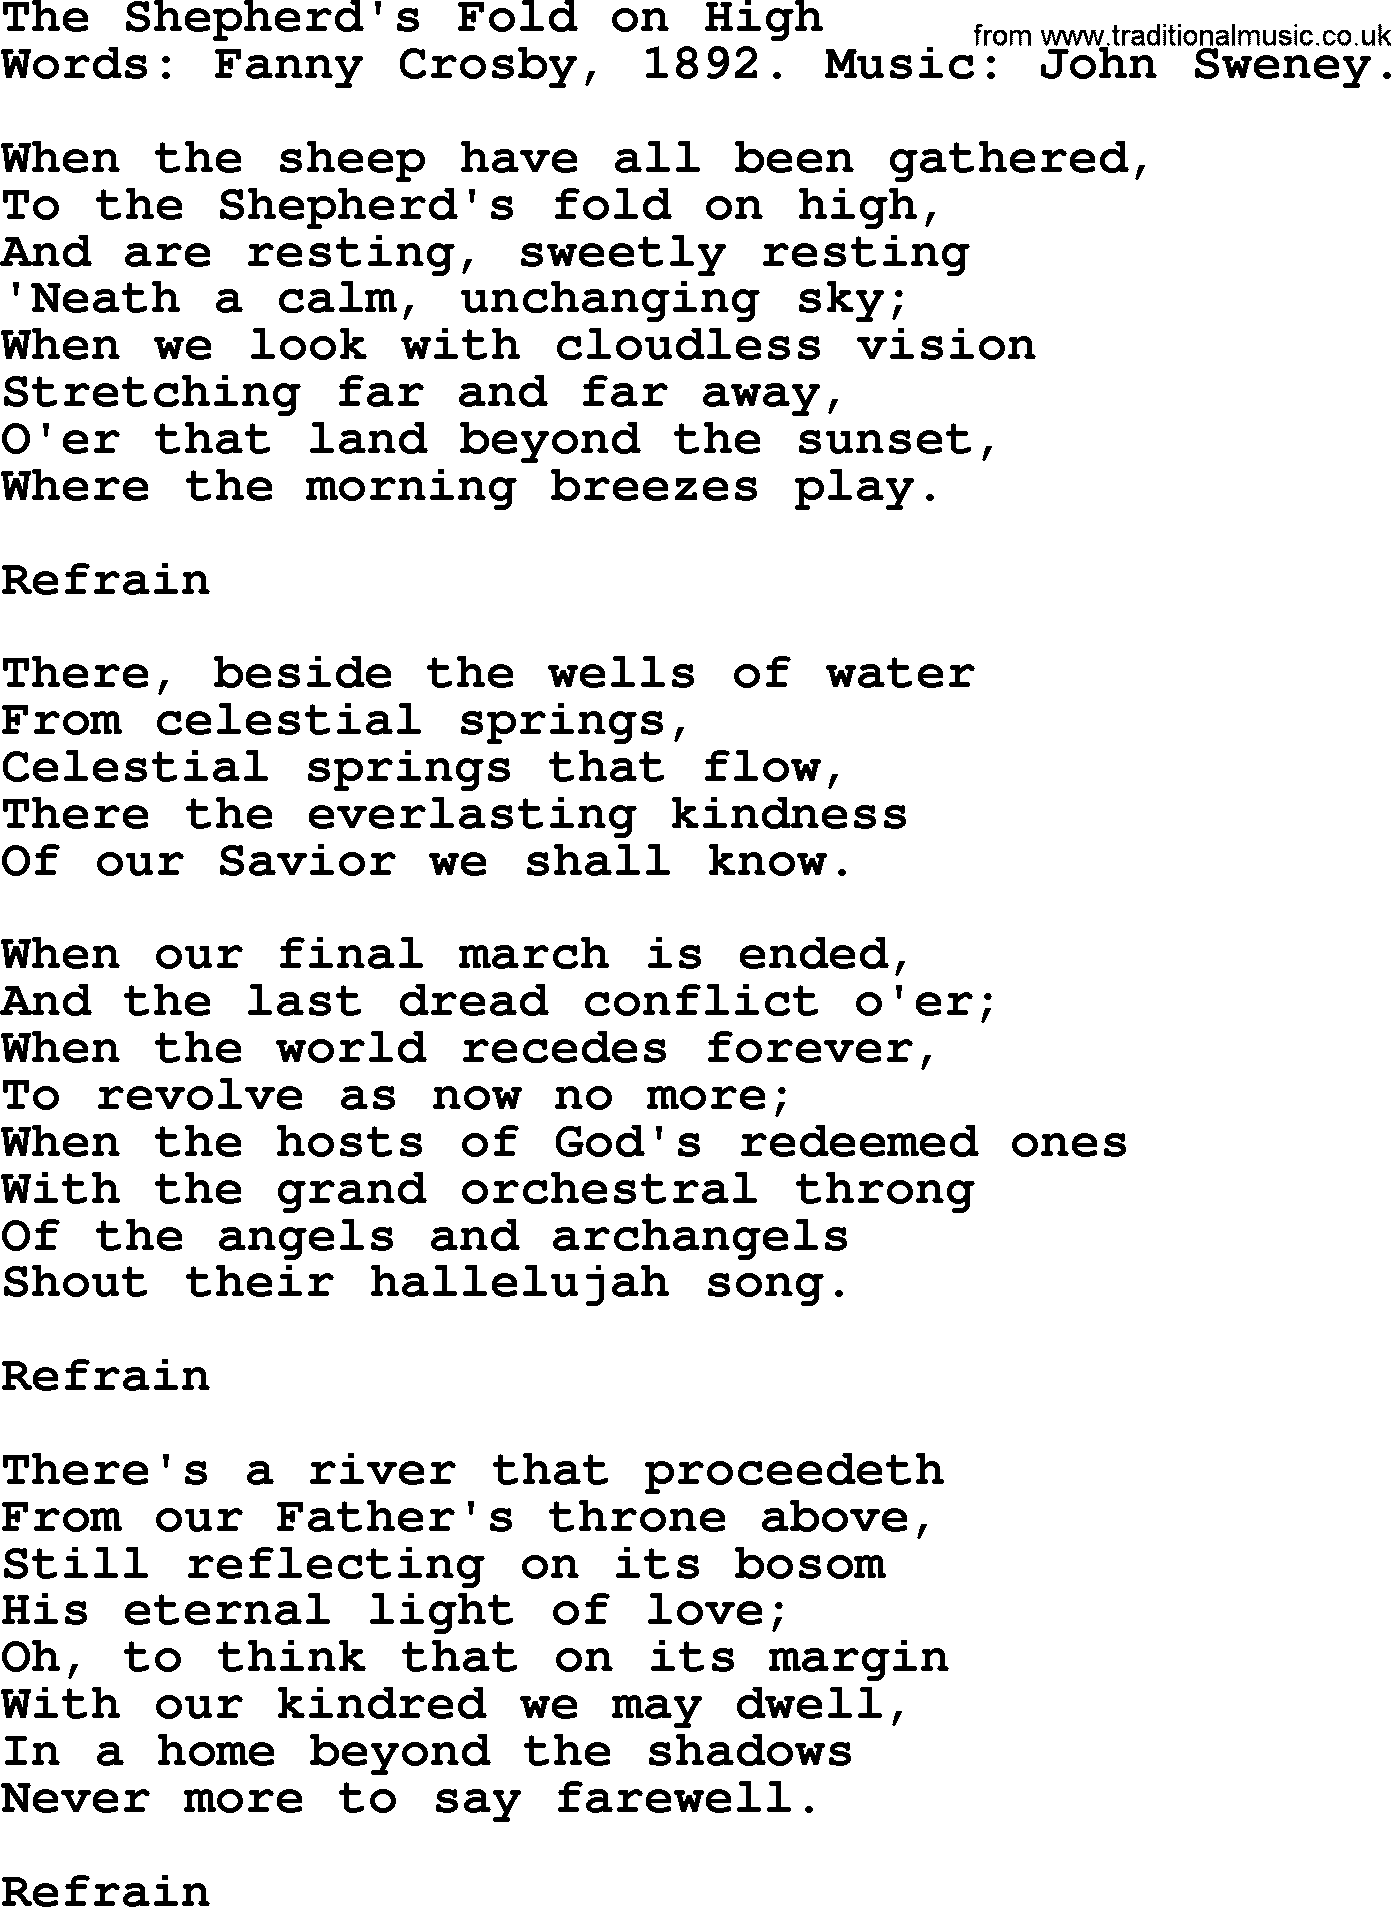 Fanny Crosby song: The Shepherd's Fold On High, lyrics